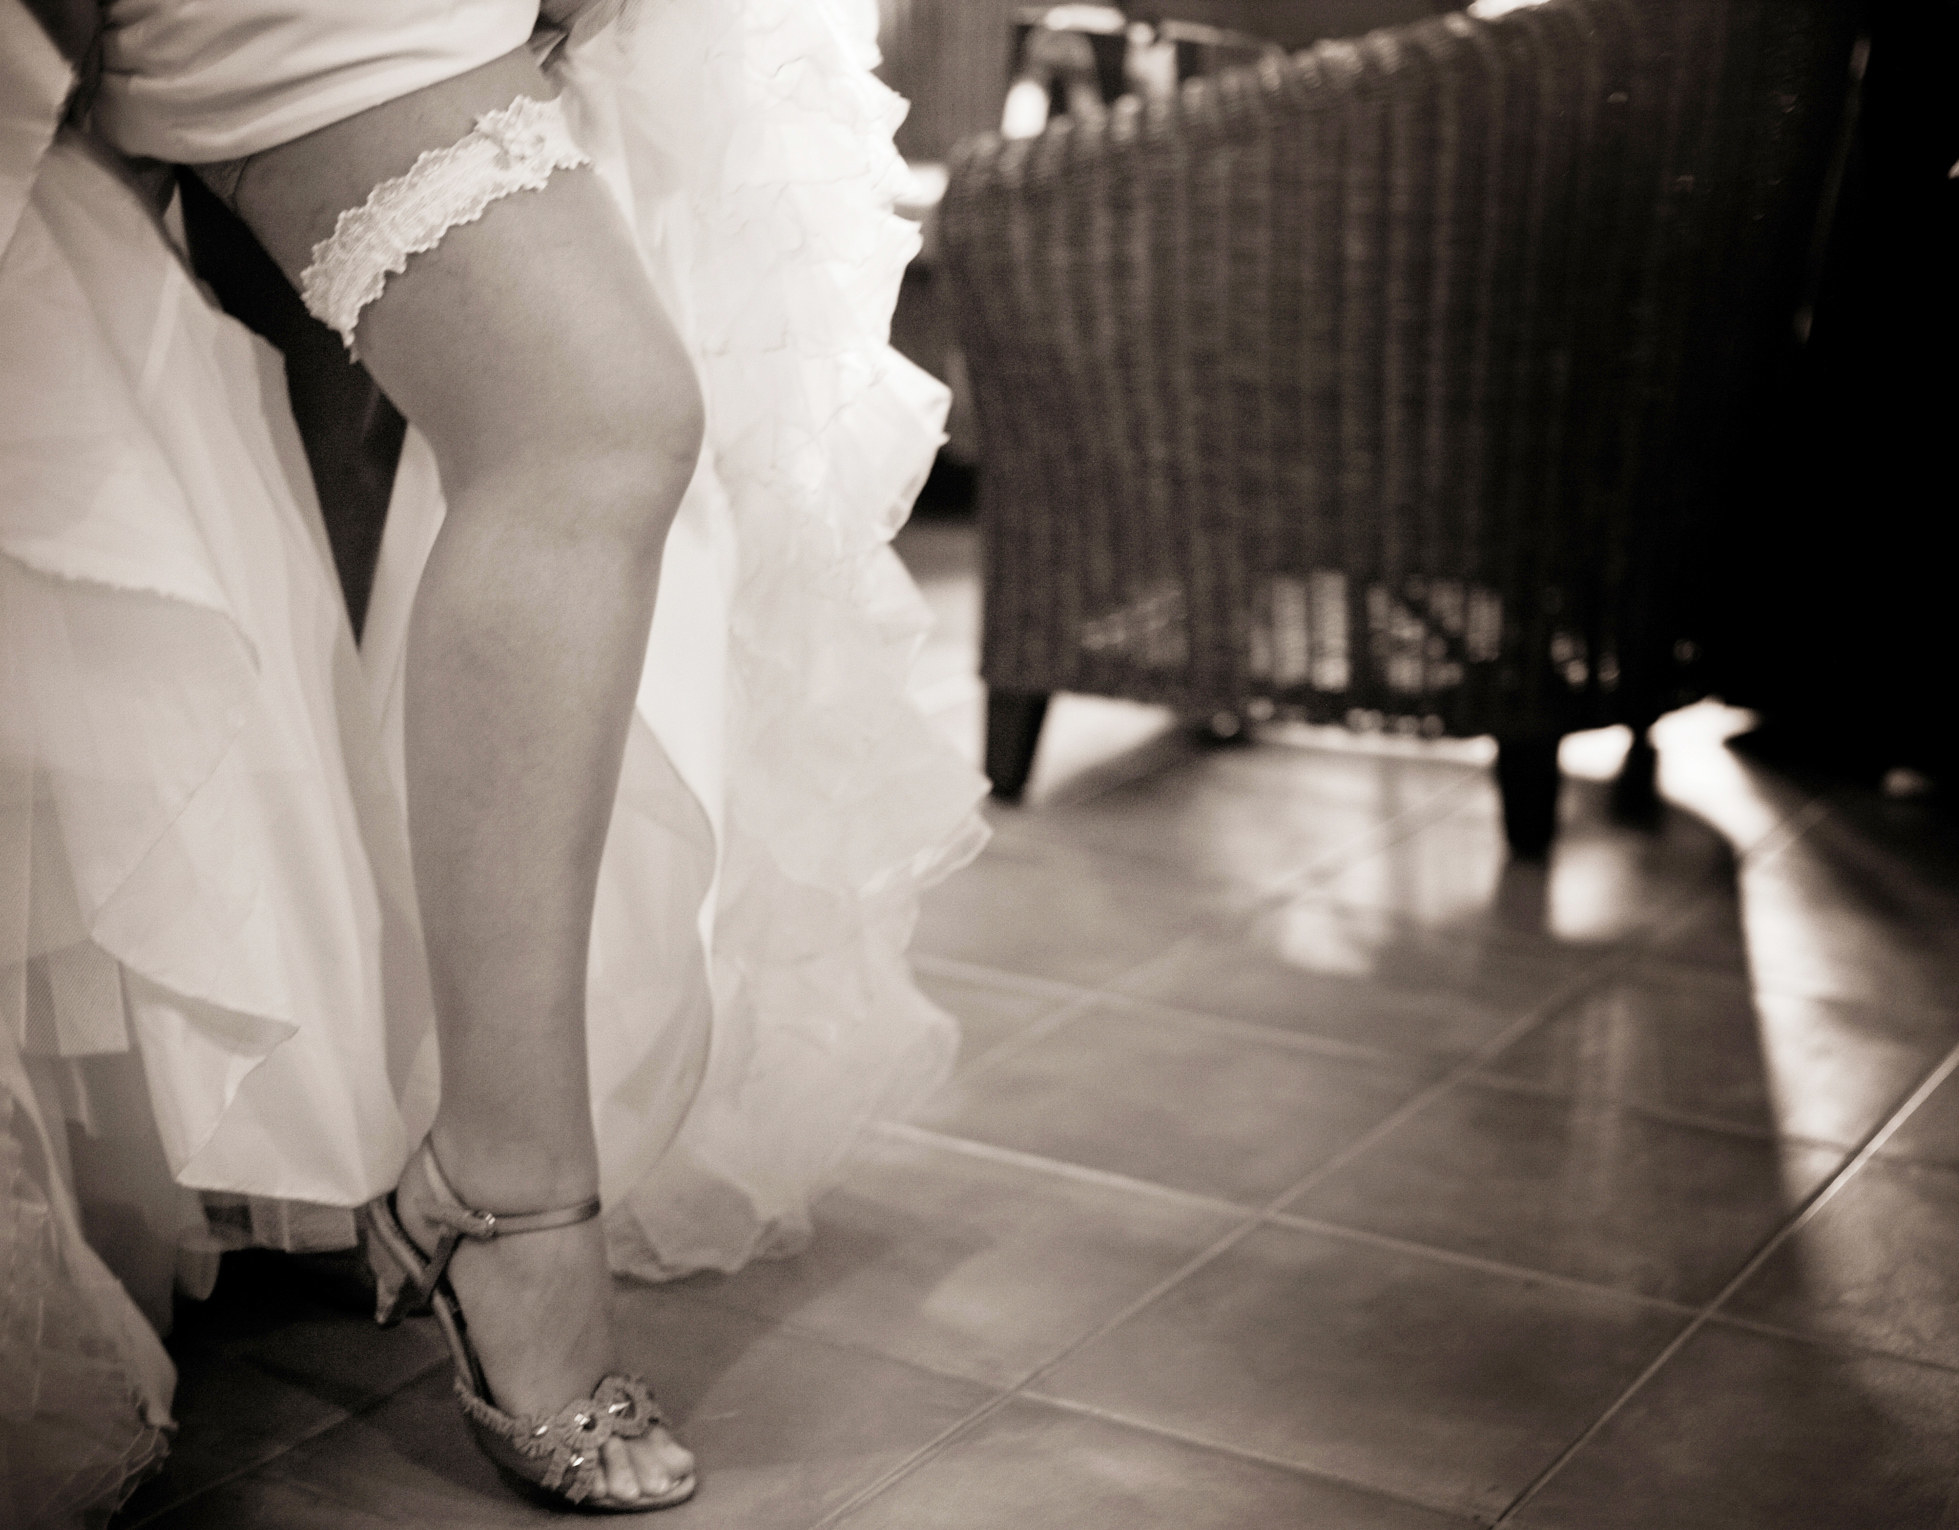 A bride flashing the garter on her leg